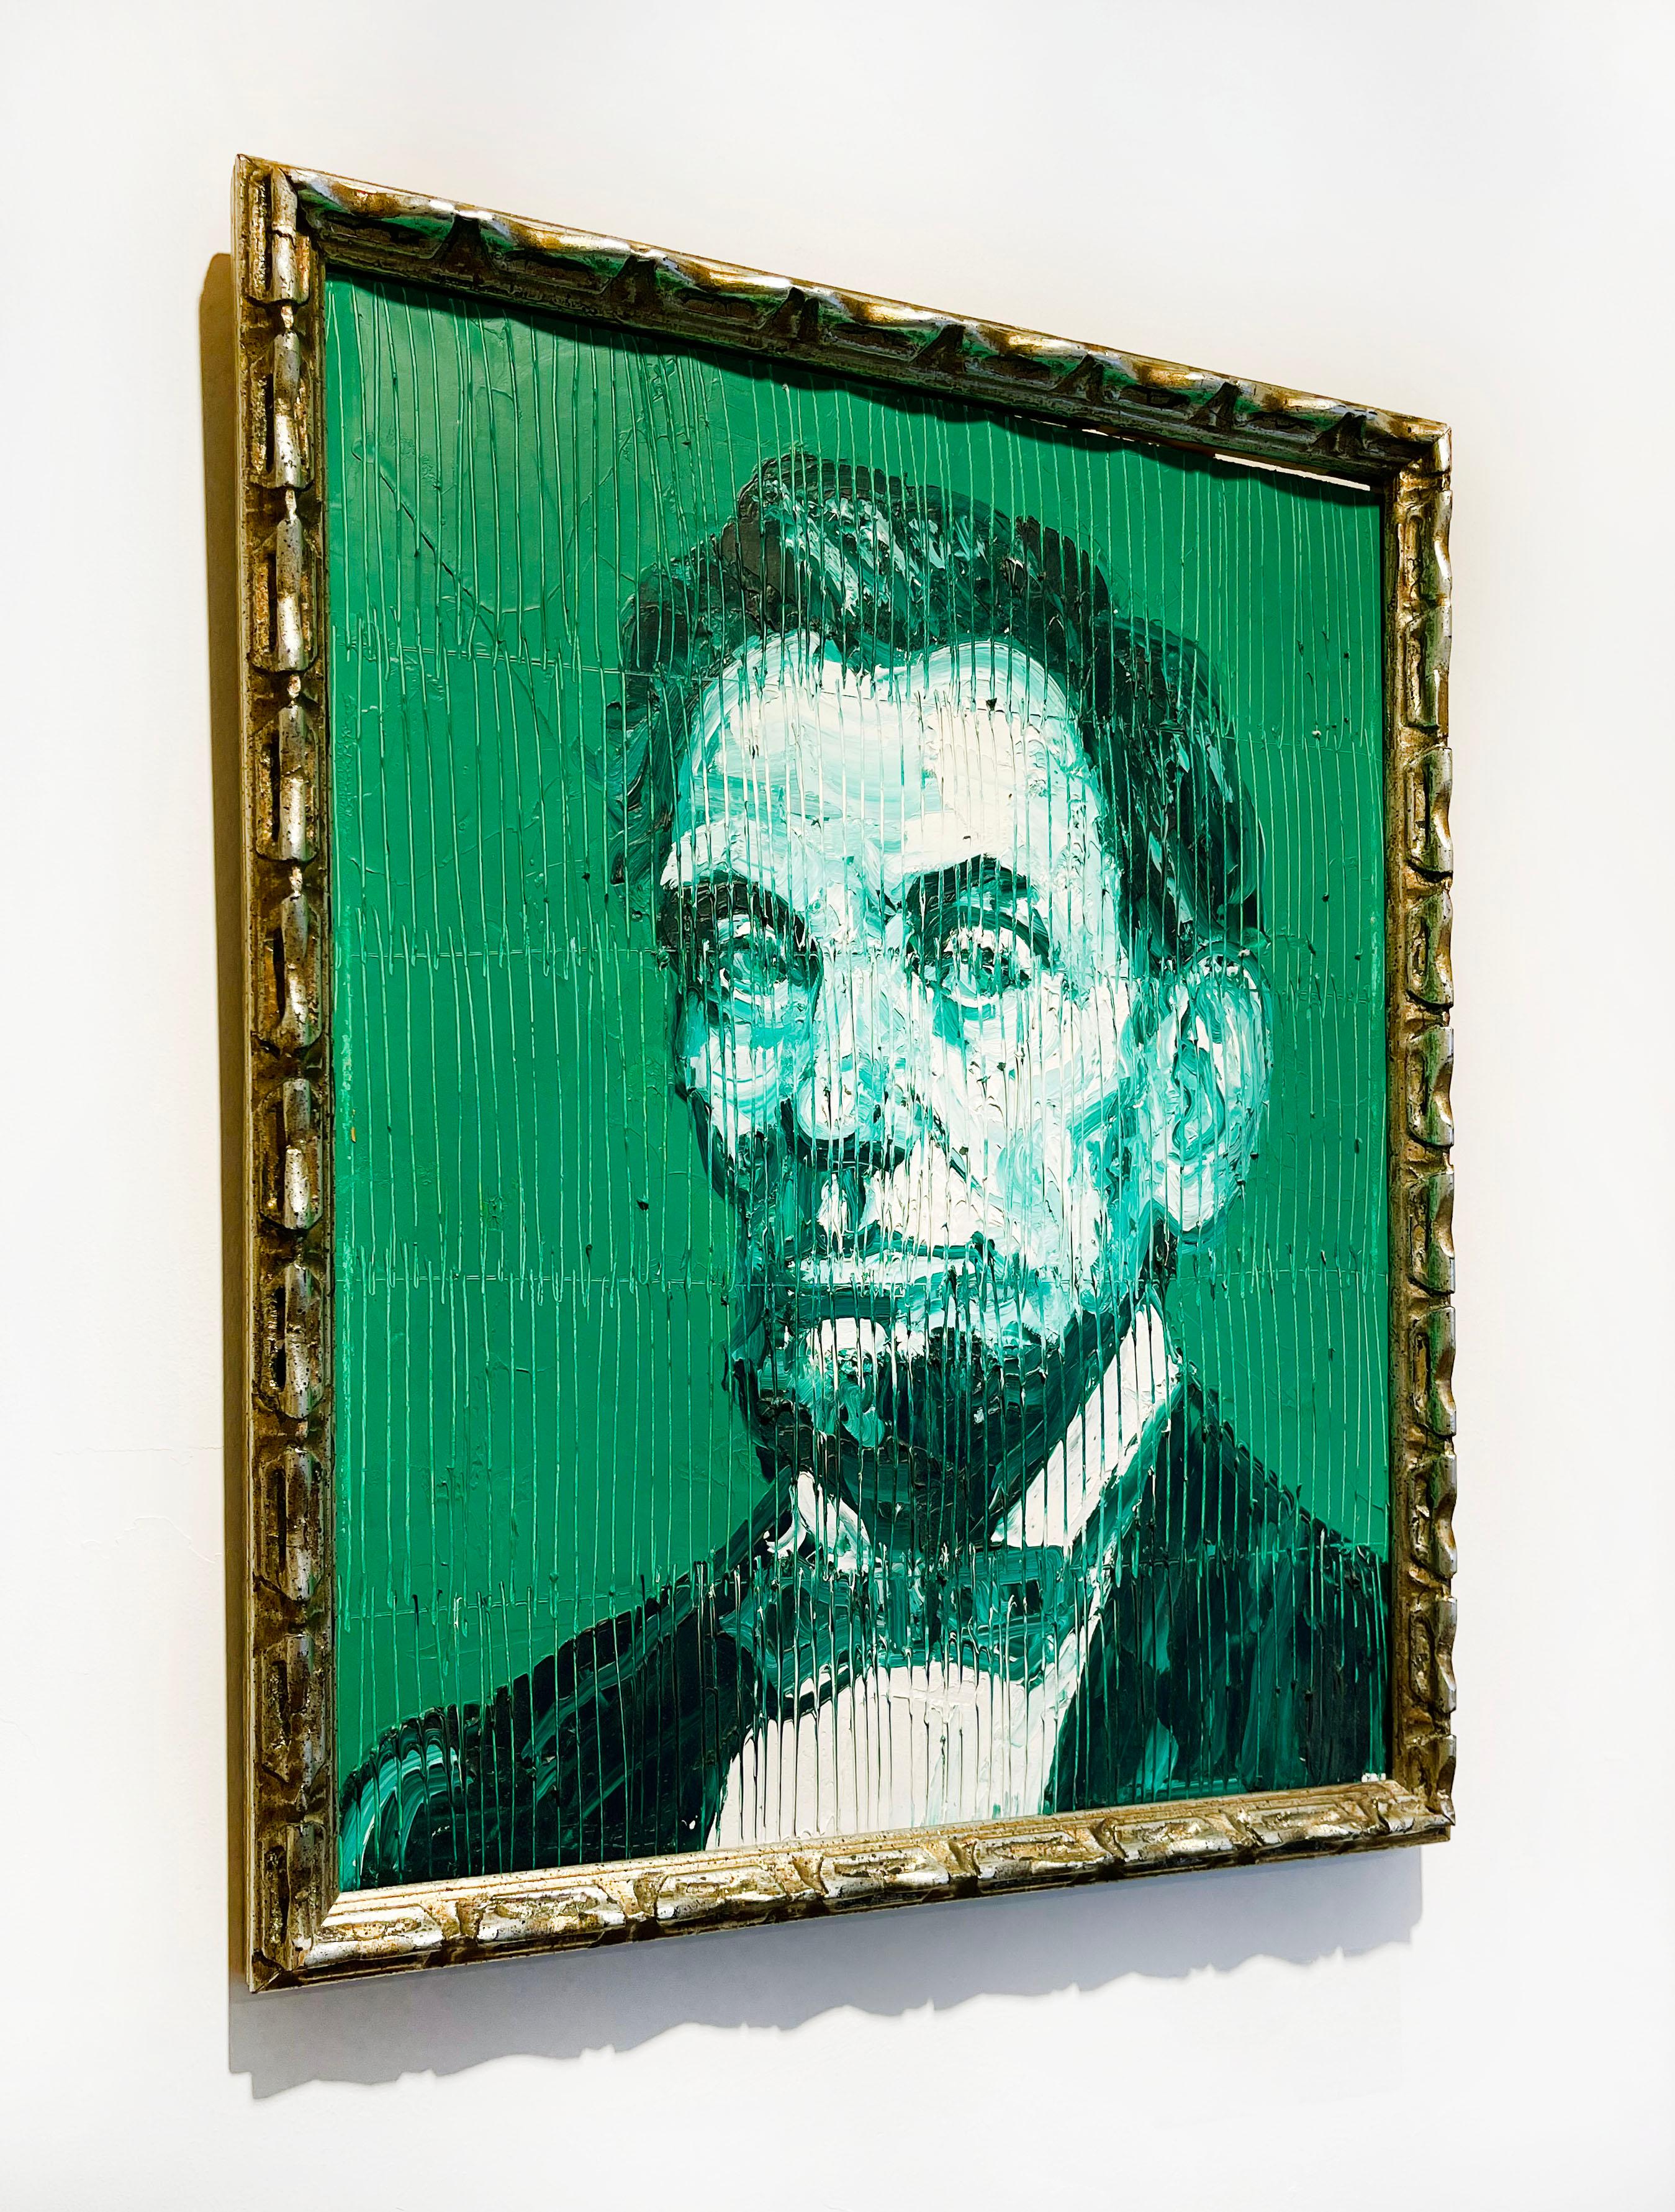 Artist:  Slonem, Hunt
Title:  Untitled (Emerald Abe) 
Series:  Abraham Lincoln
Date:  2019
Medium:  Oil on wood
Unframed Dimensions:  18